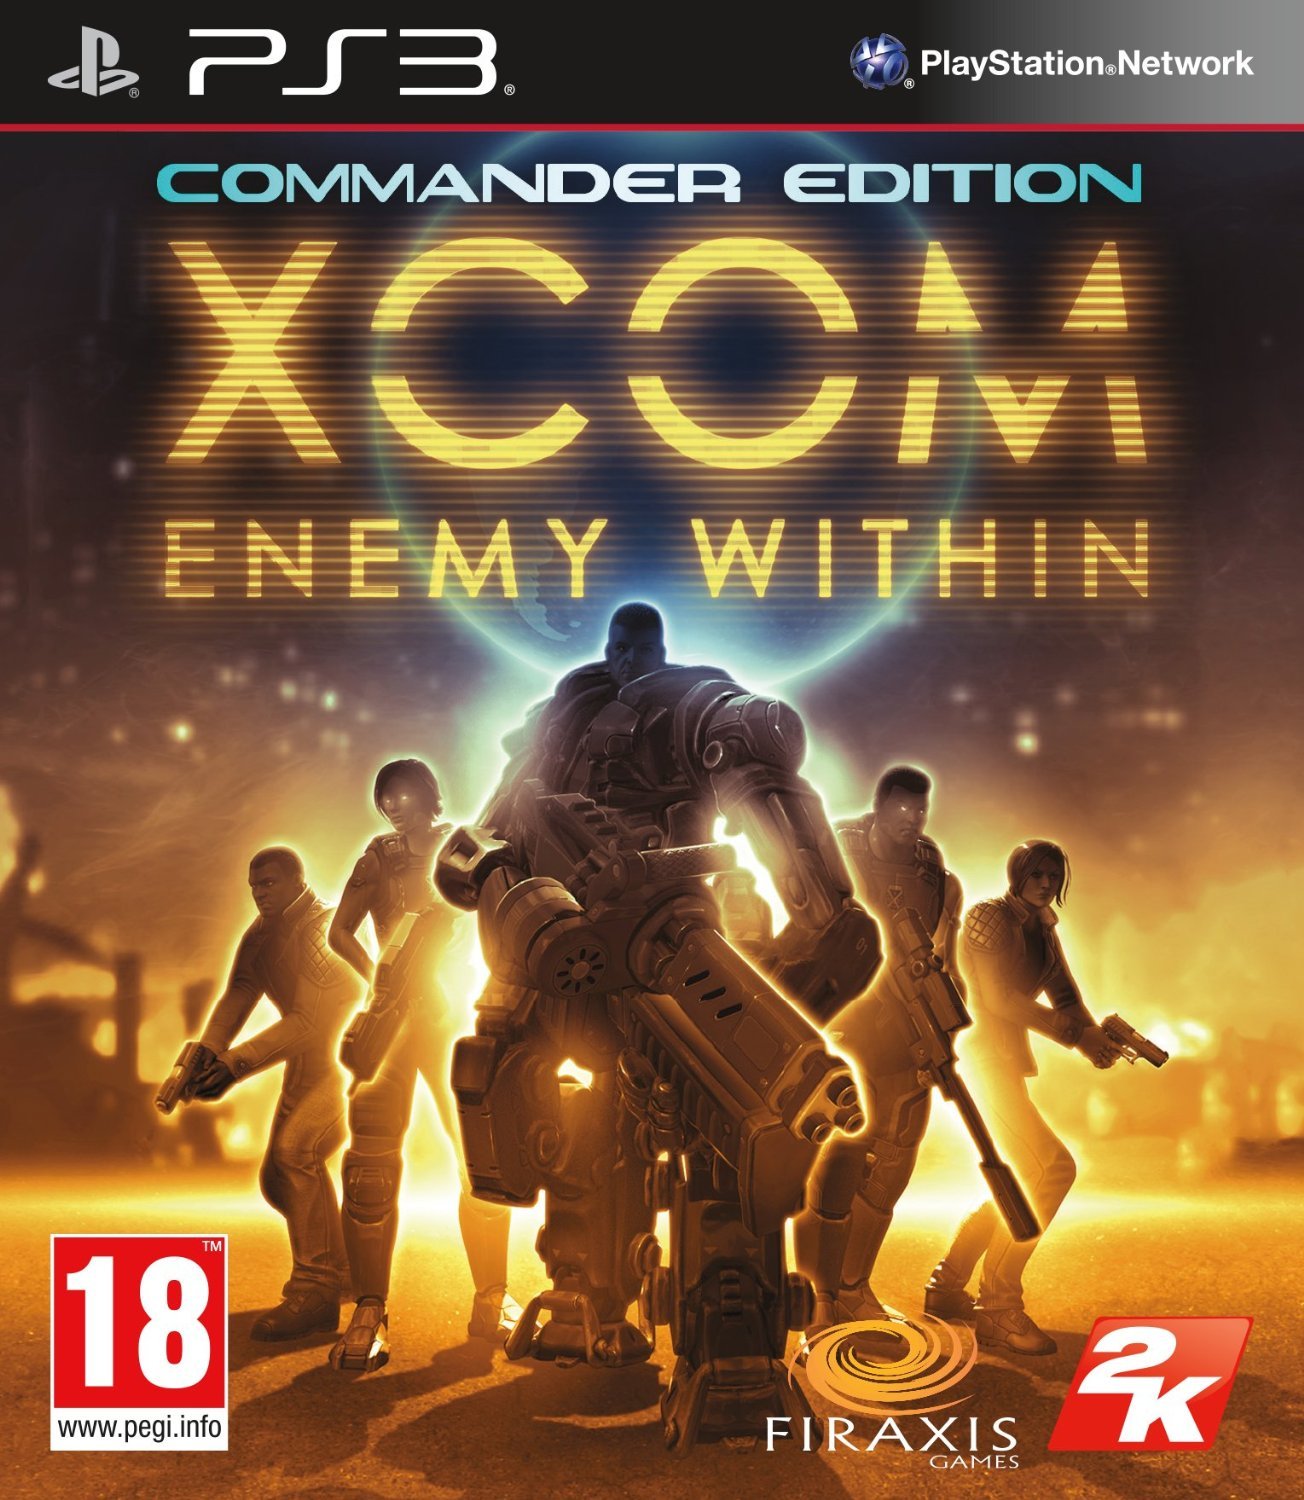 XCOM : Enemy Within